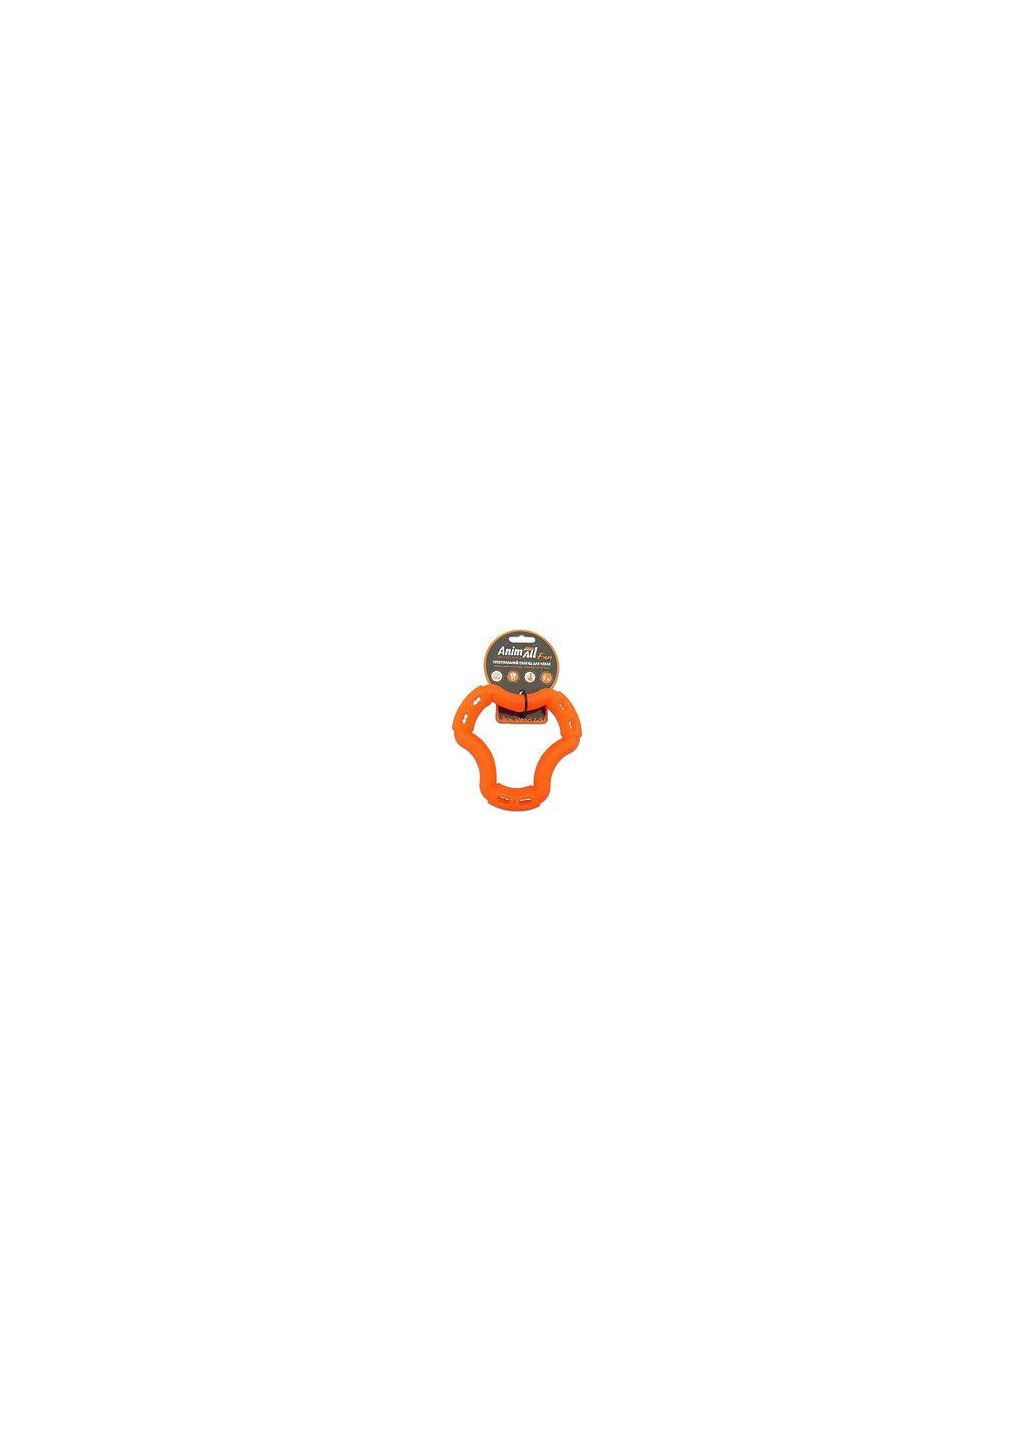 Игрушка Fun кольцо 6 сторон, оранжевый, 12 см AnimAll (278308058)